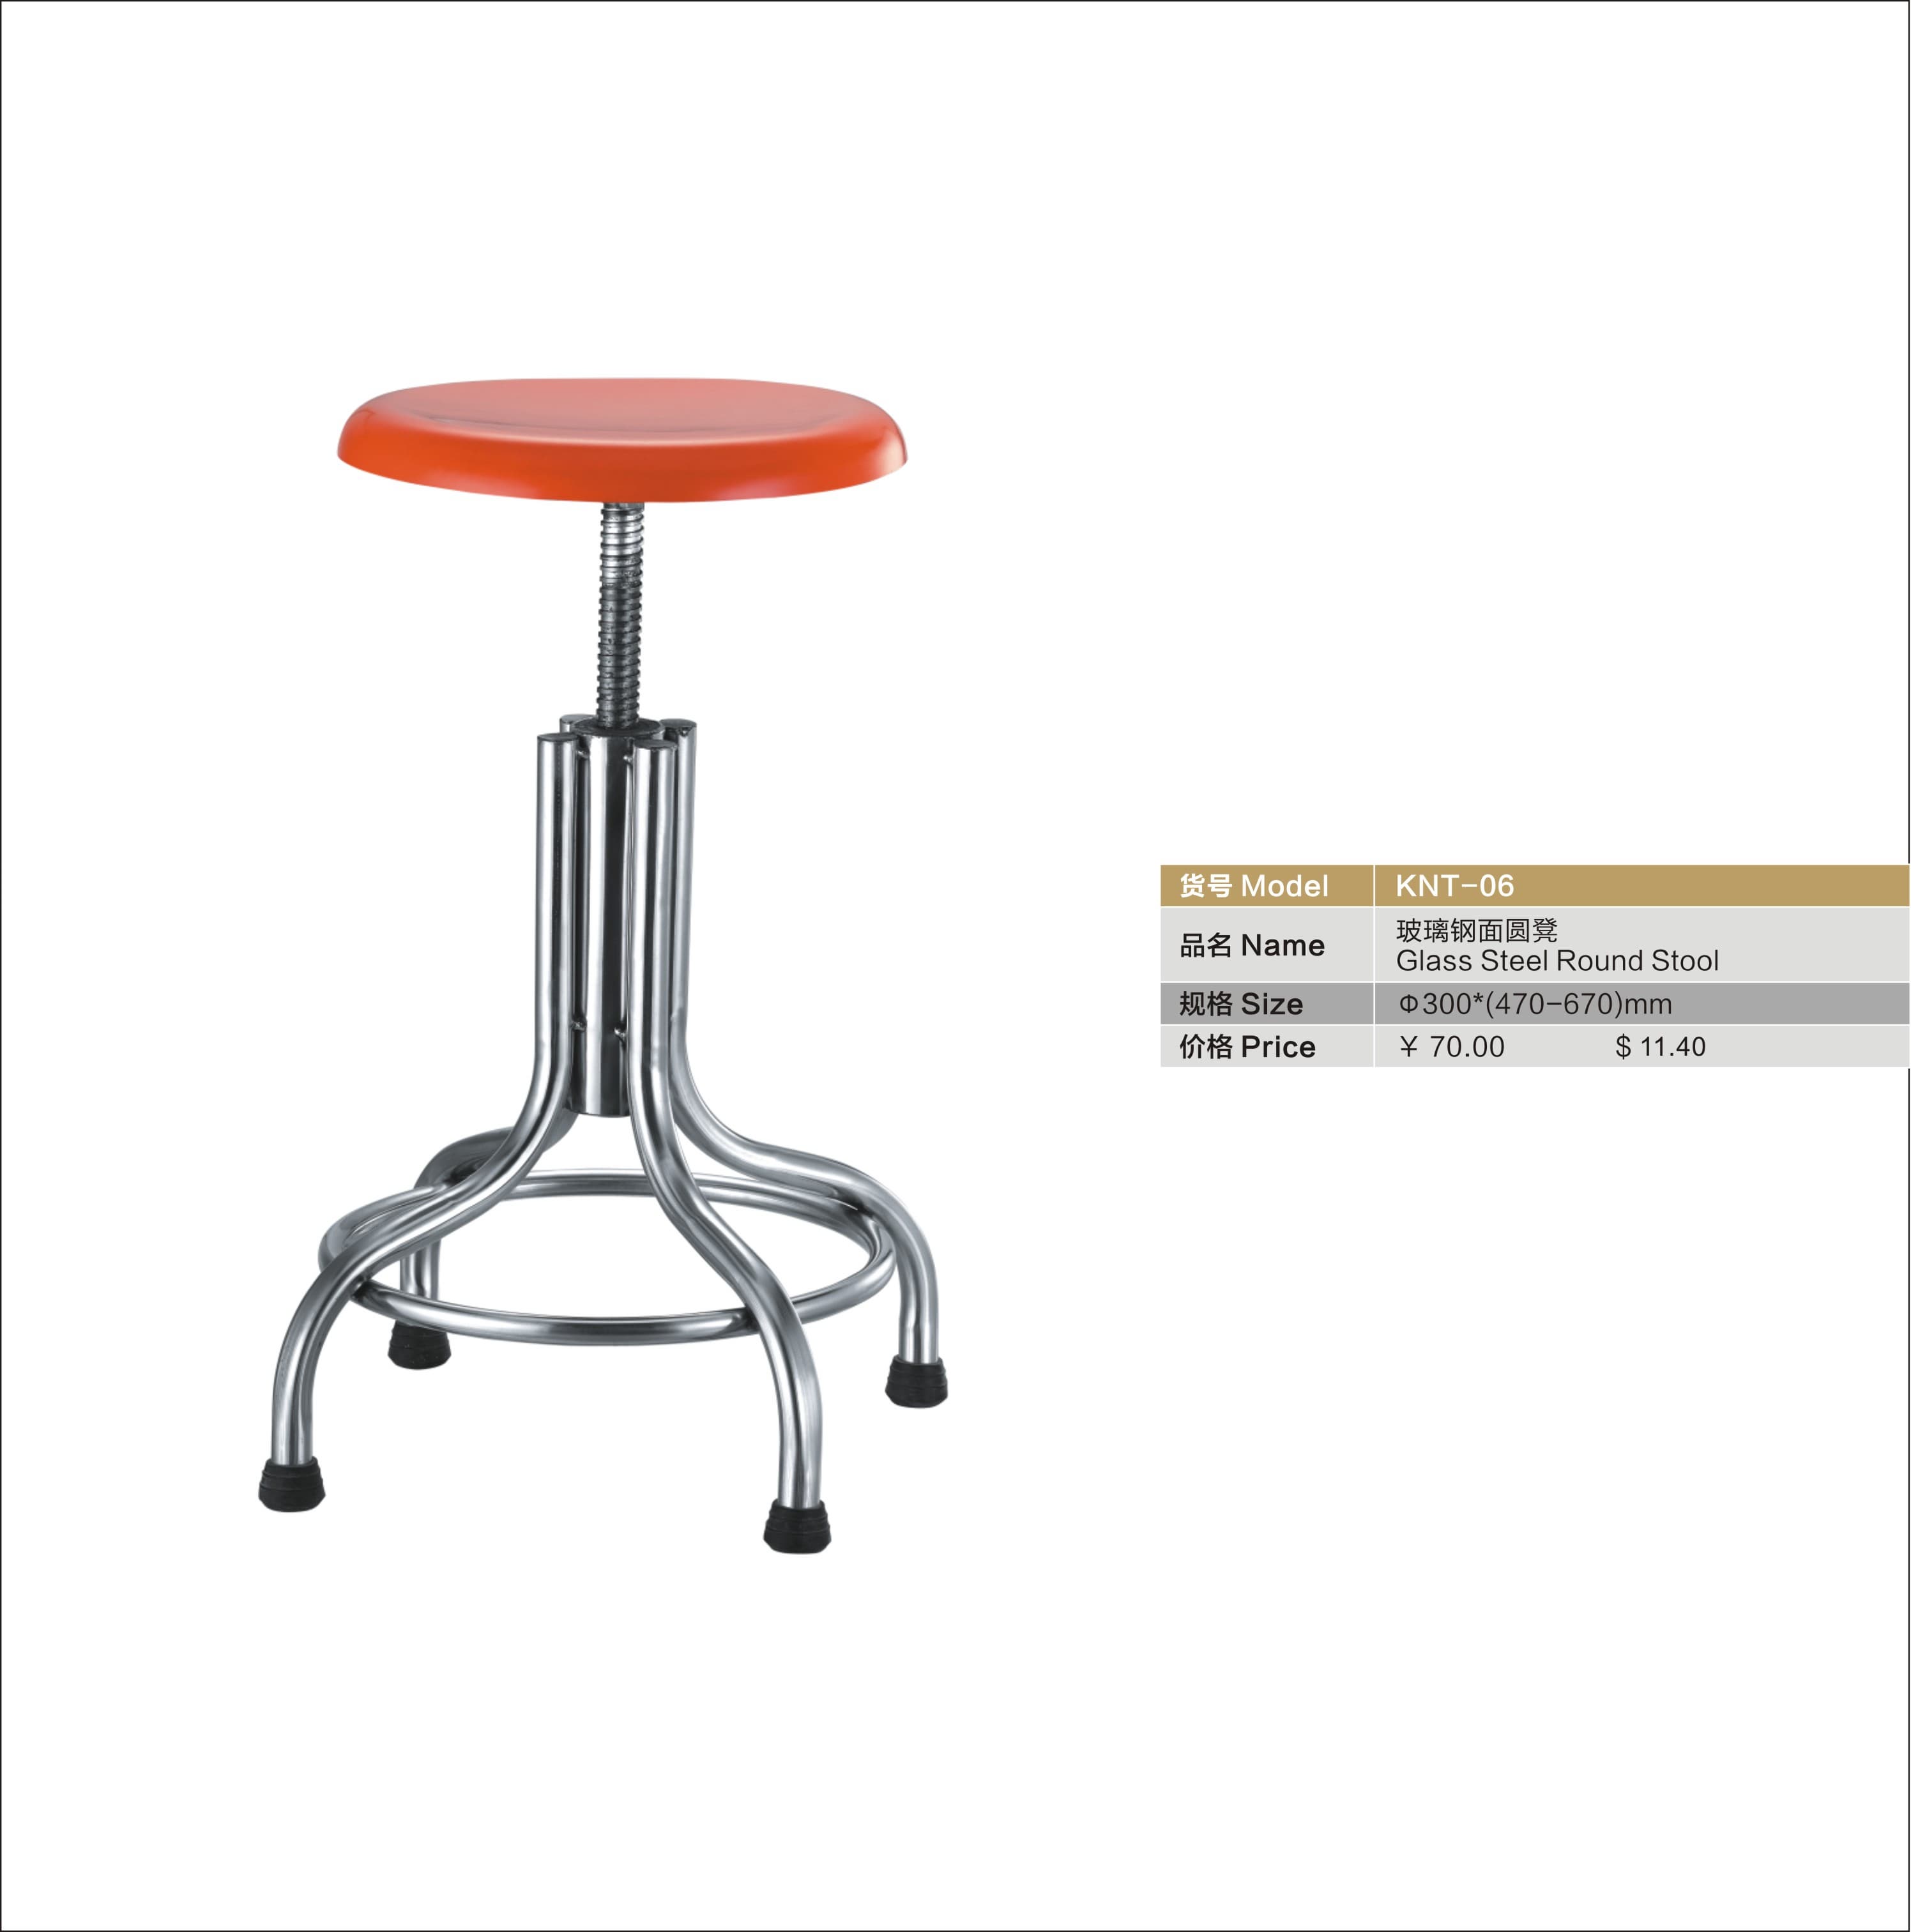 Glass steel round stool